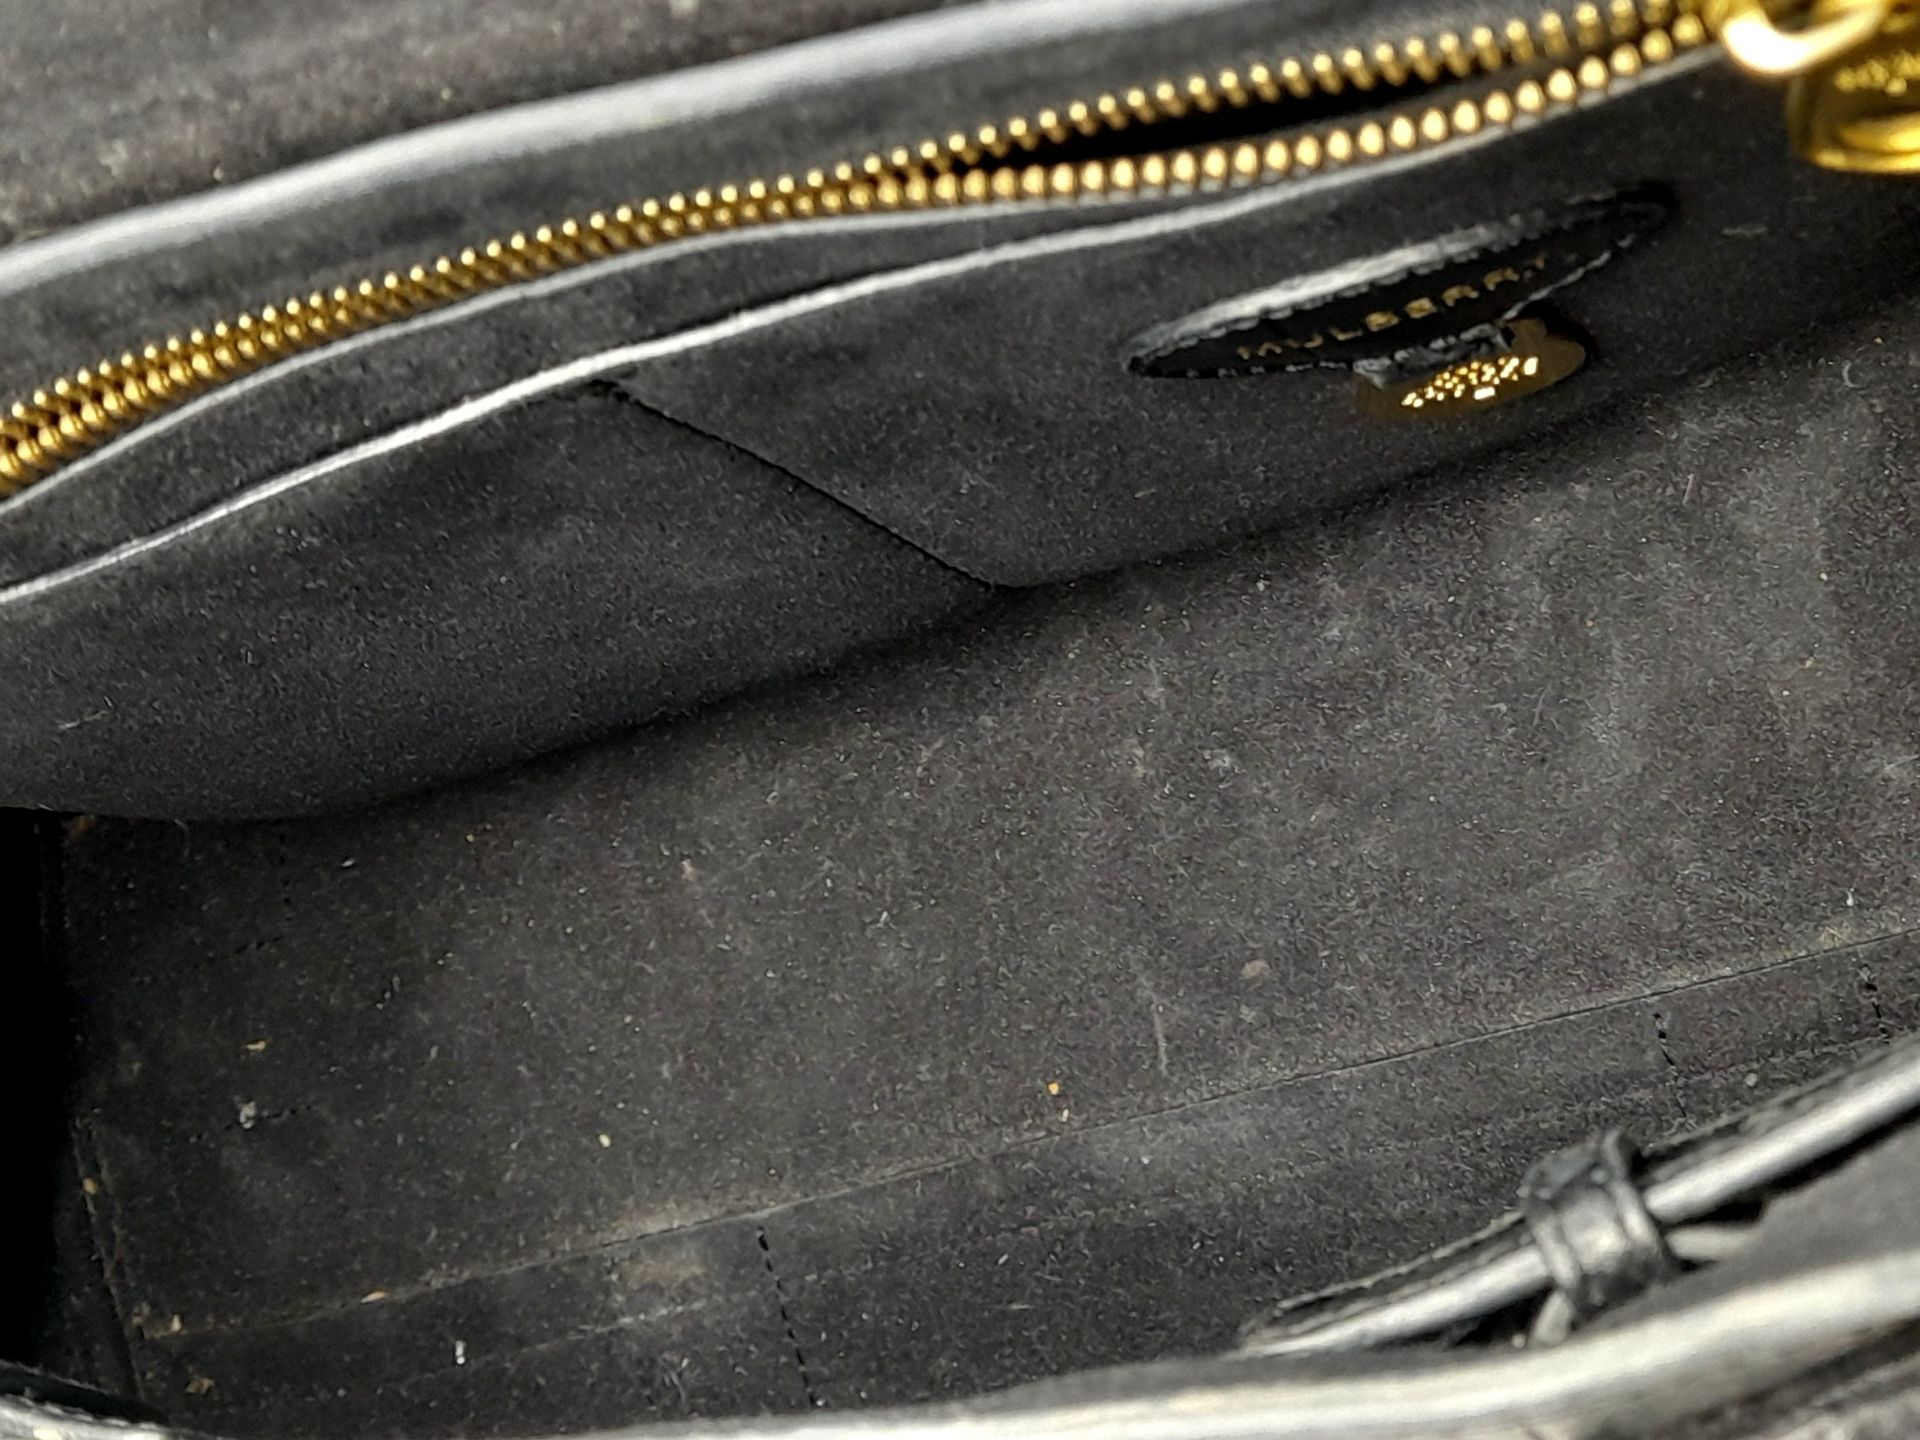 A Mulberry Bayswater Handbag. Black Croc Embossed Leather exterior, gold-tone hardware, a clochette, - Bild 3 aus 7